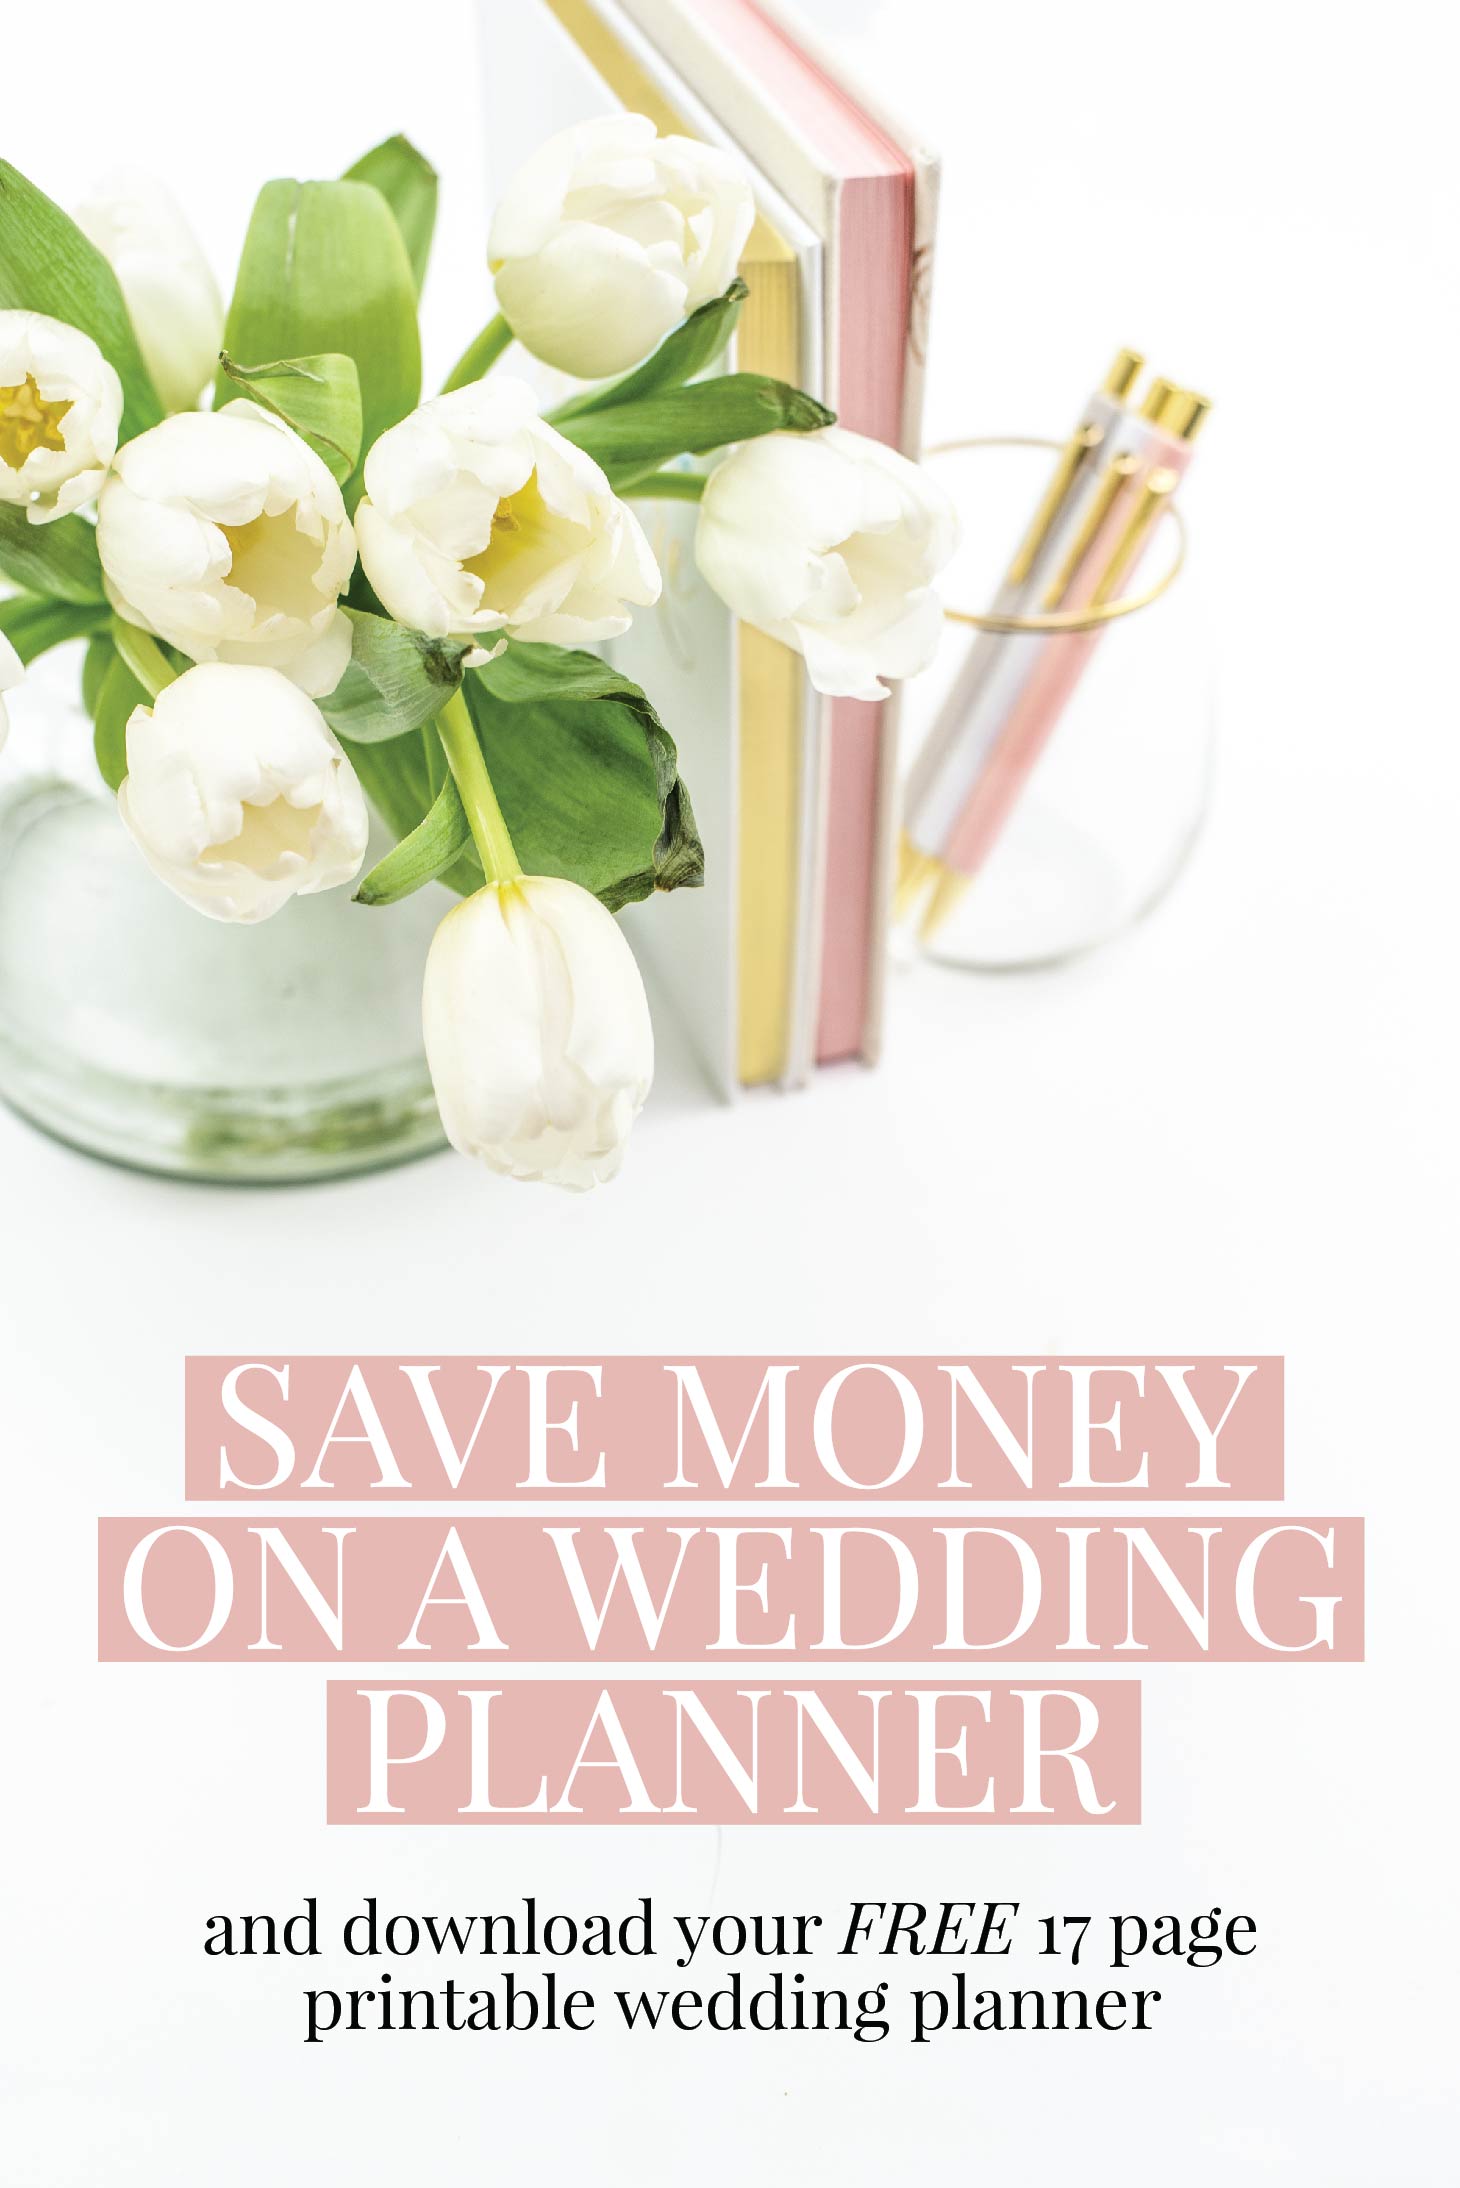 Save-money-on-a-planner-01.jpg